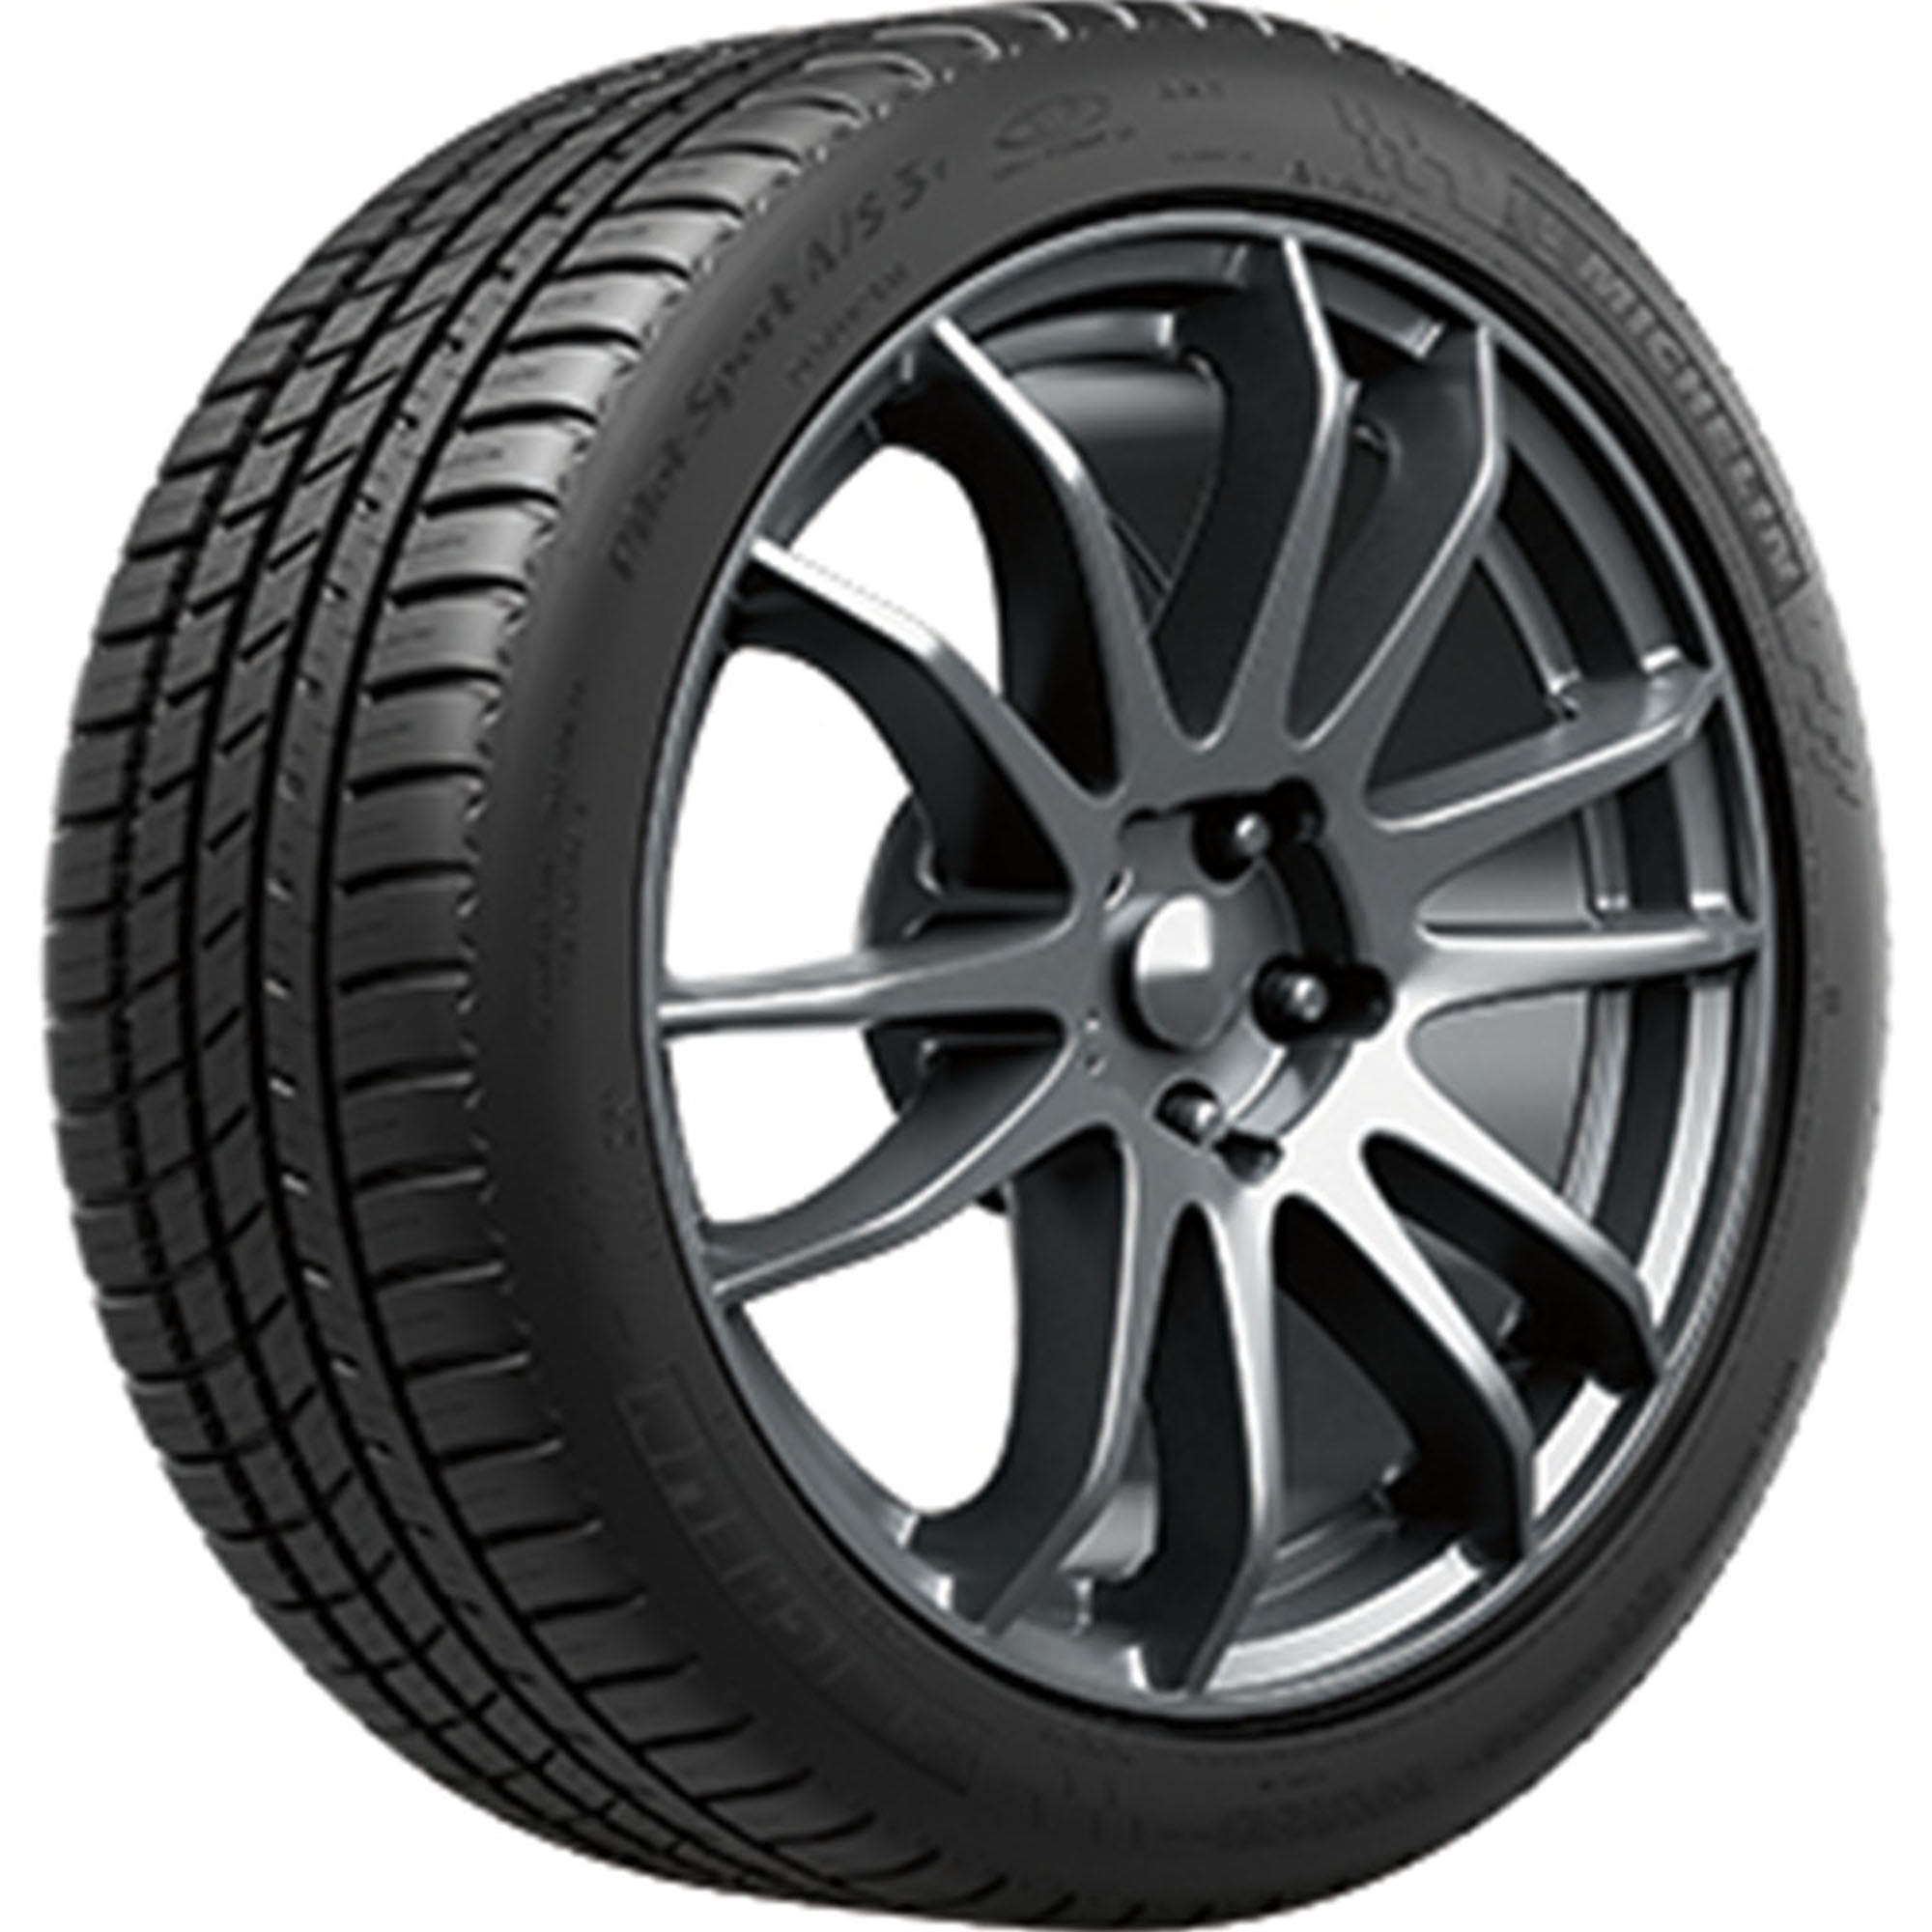 A/S Passenger 3+ All Michelin Pilot 84V Season XL Tire 195/45R16 UHP Sport